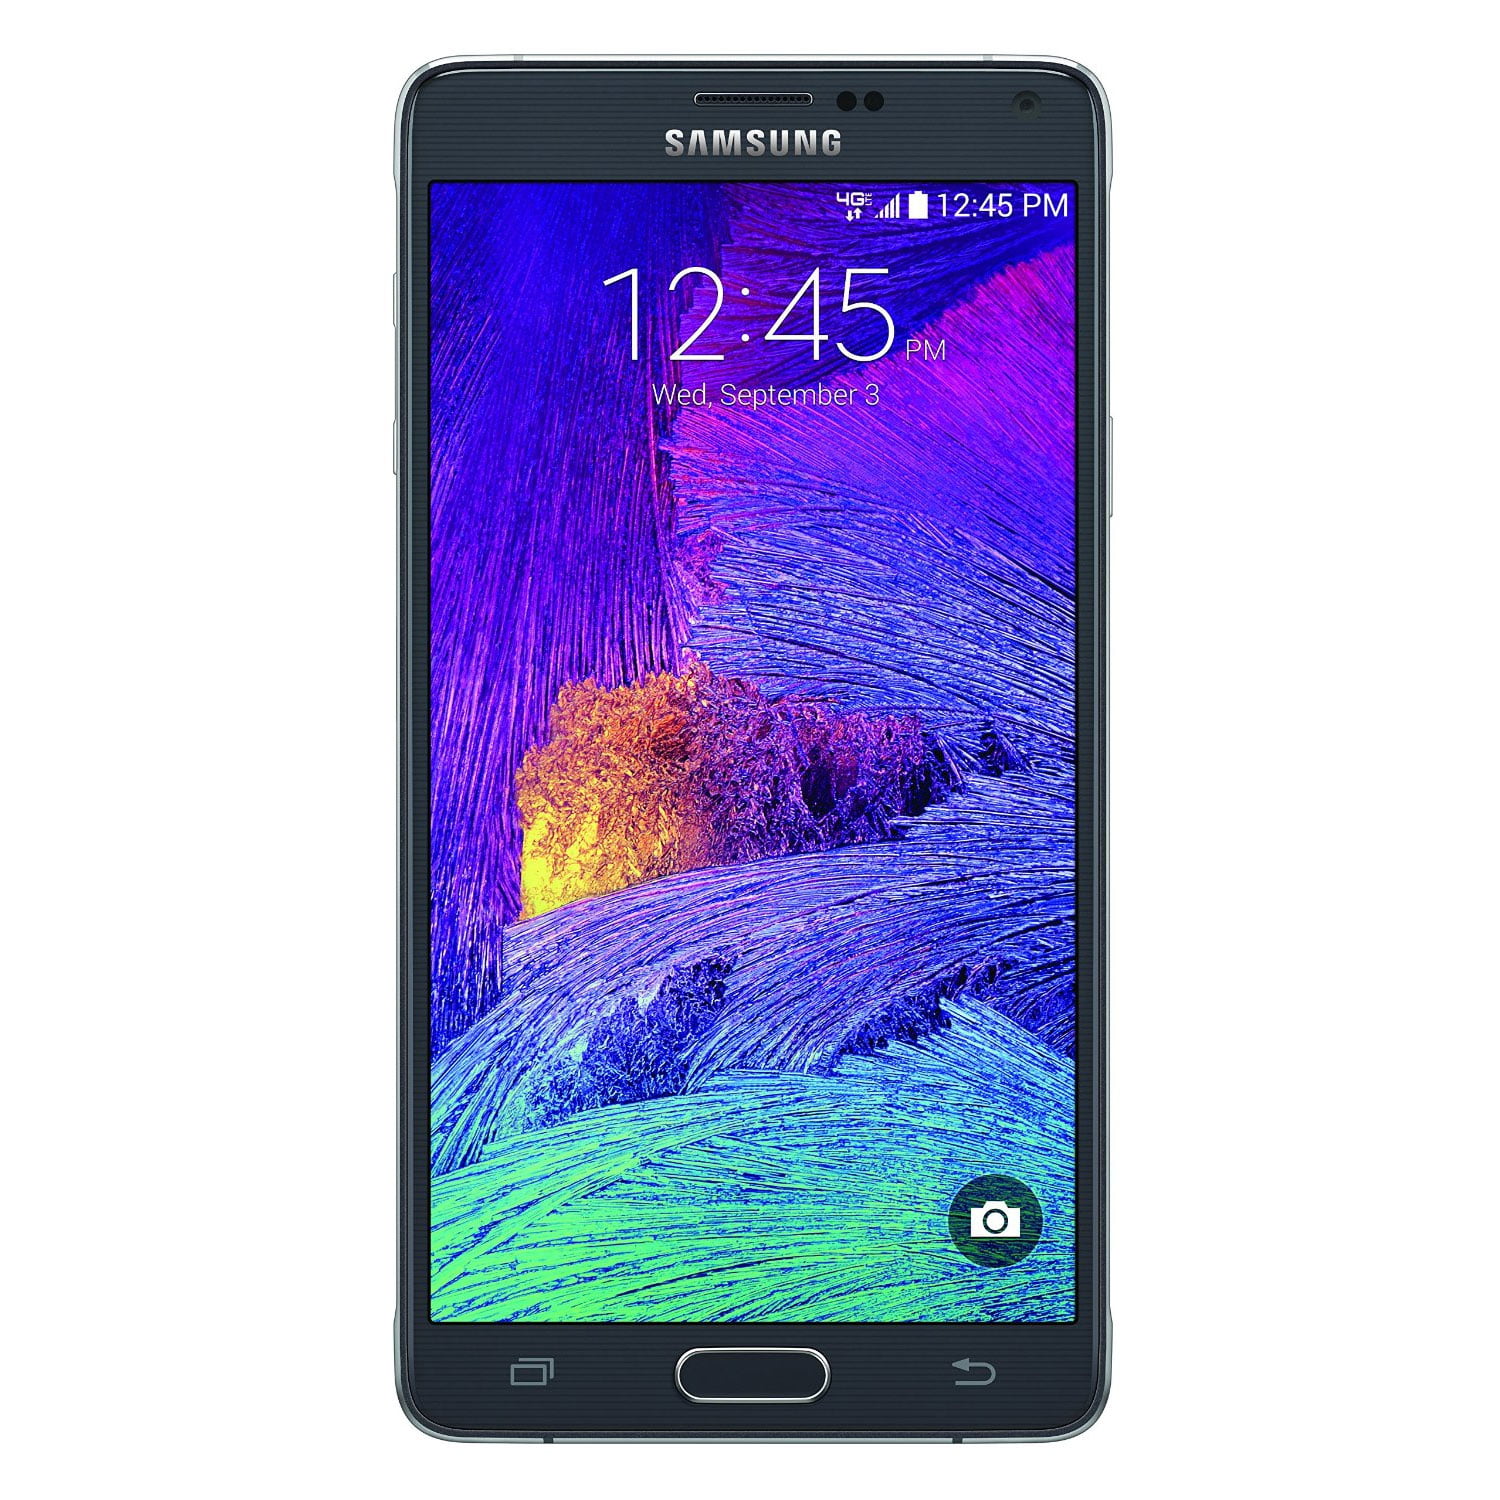 Samsung Galaxy Tab 4 SM-T537V 4G LTE Tablet, Black 10.1 